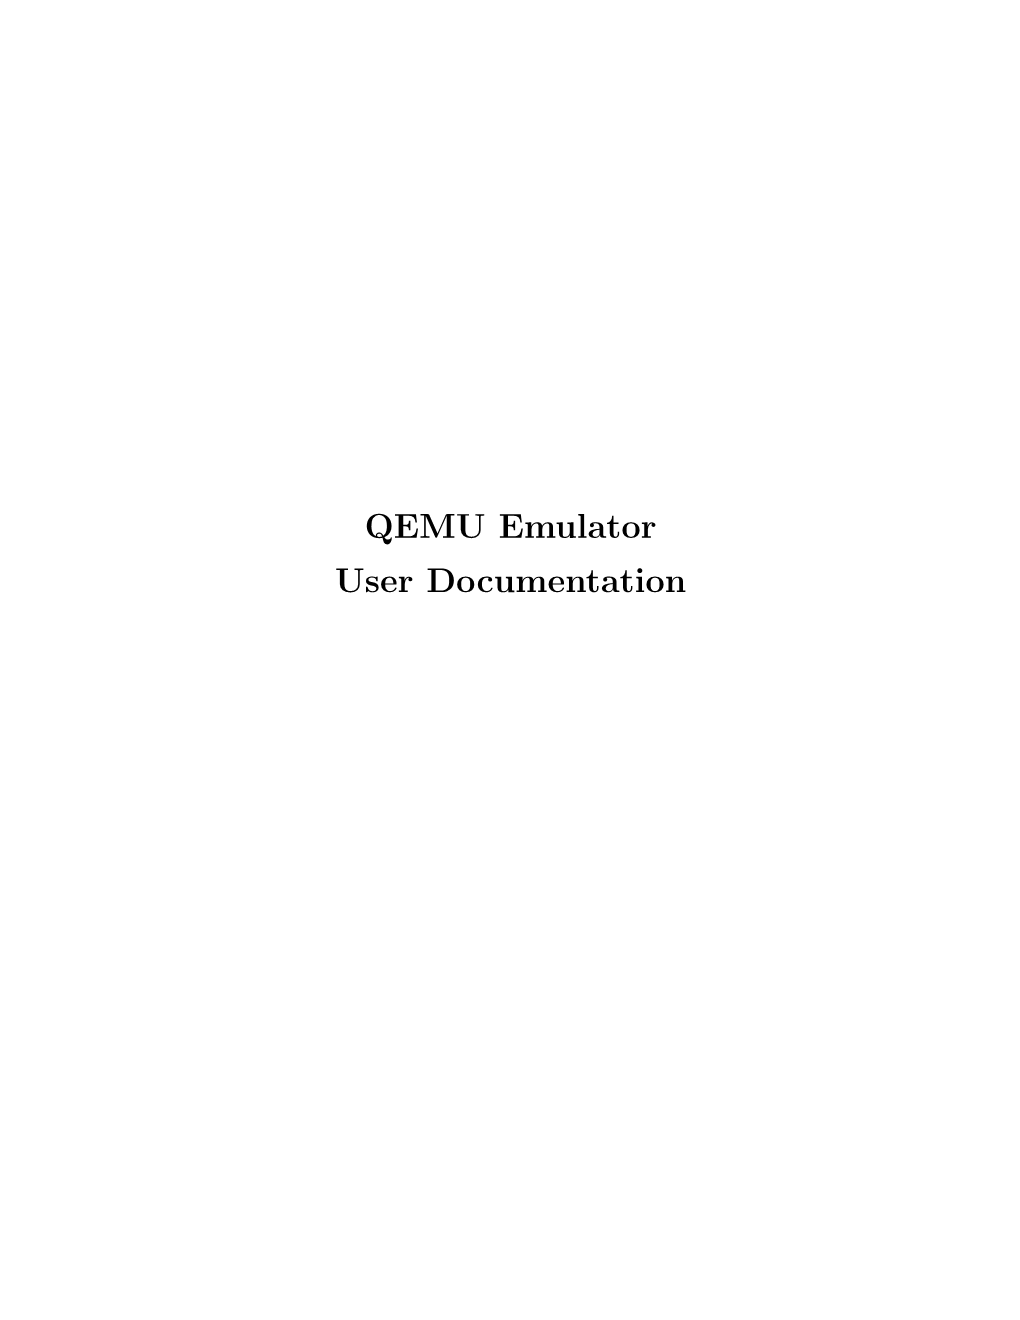 QEMU Emulator User Documentation I